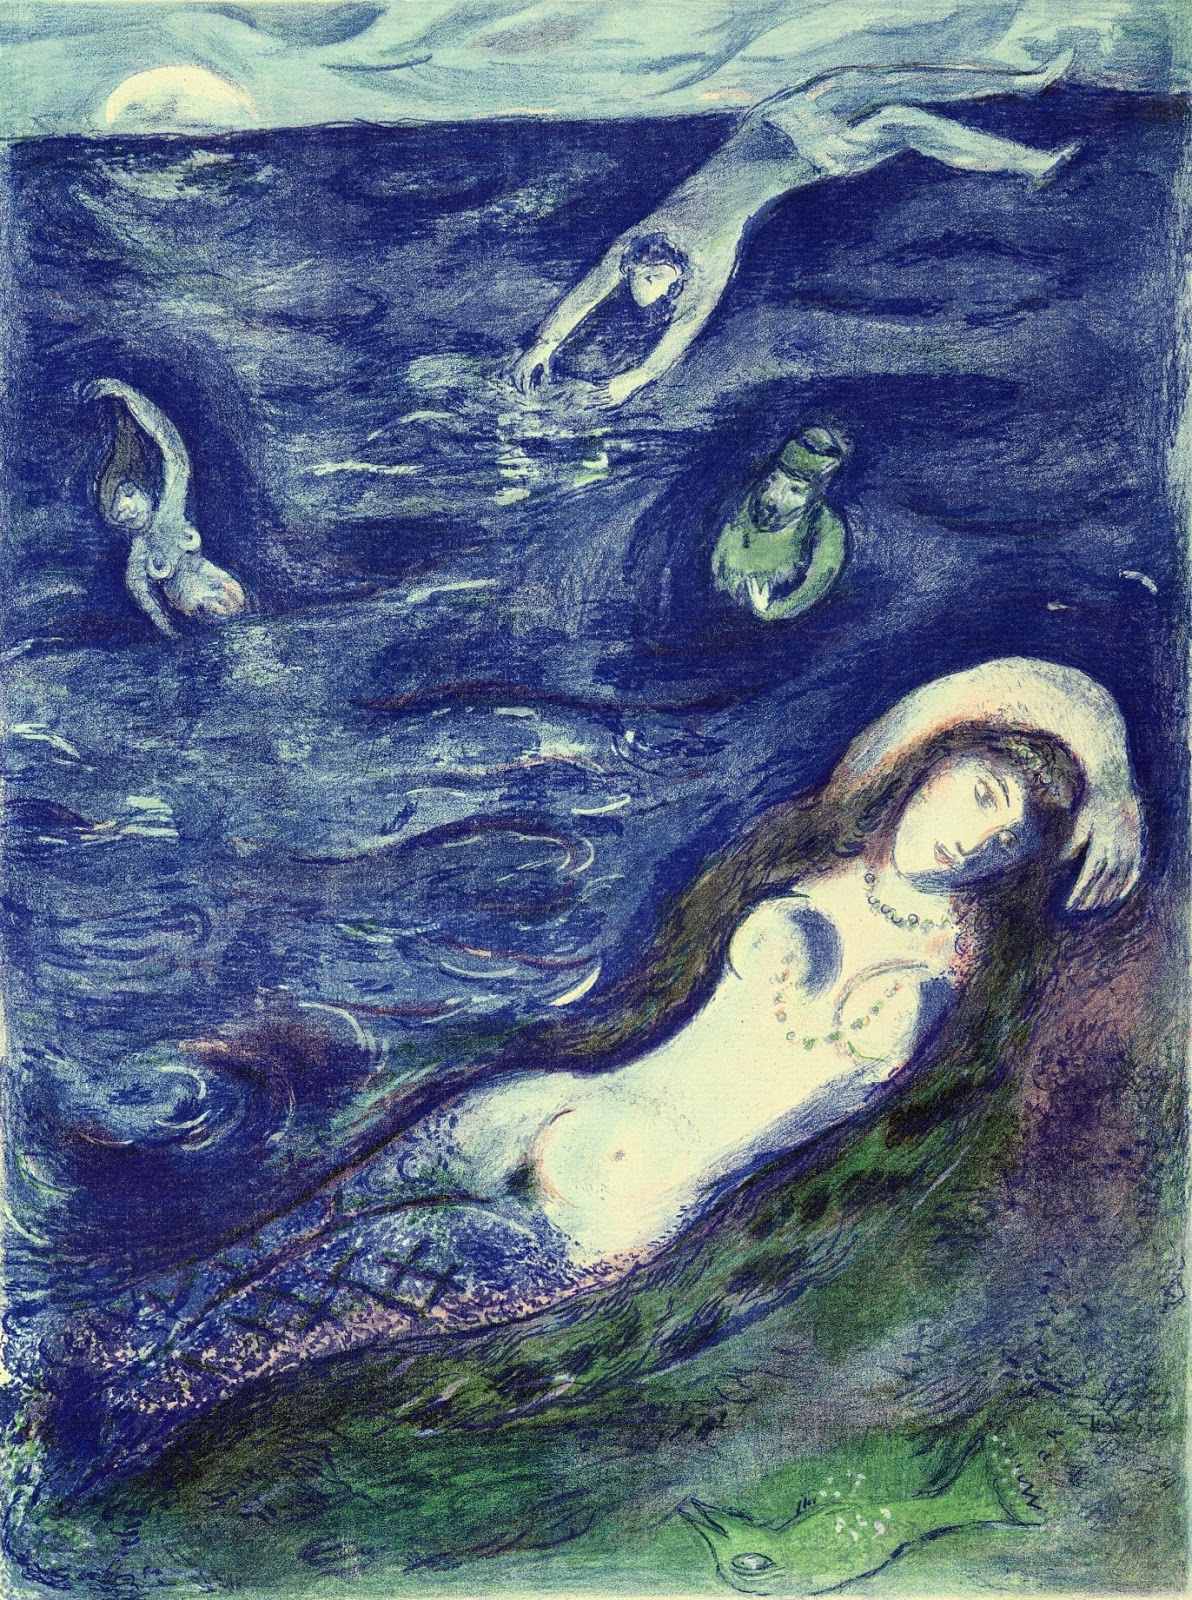 Marc+Chagall-1887-1985 (237).jpg